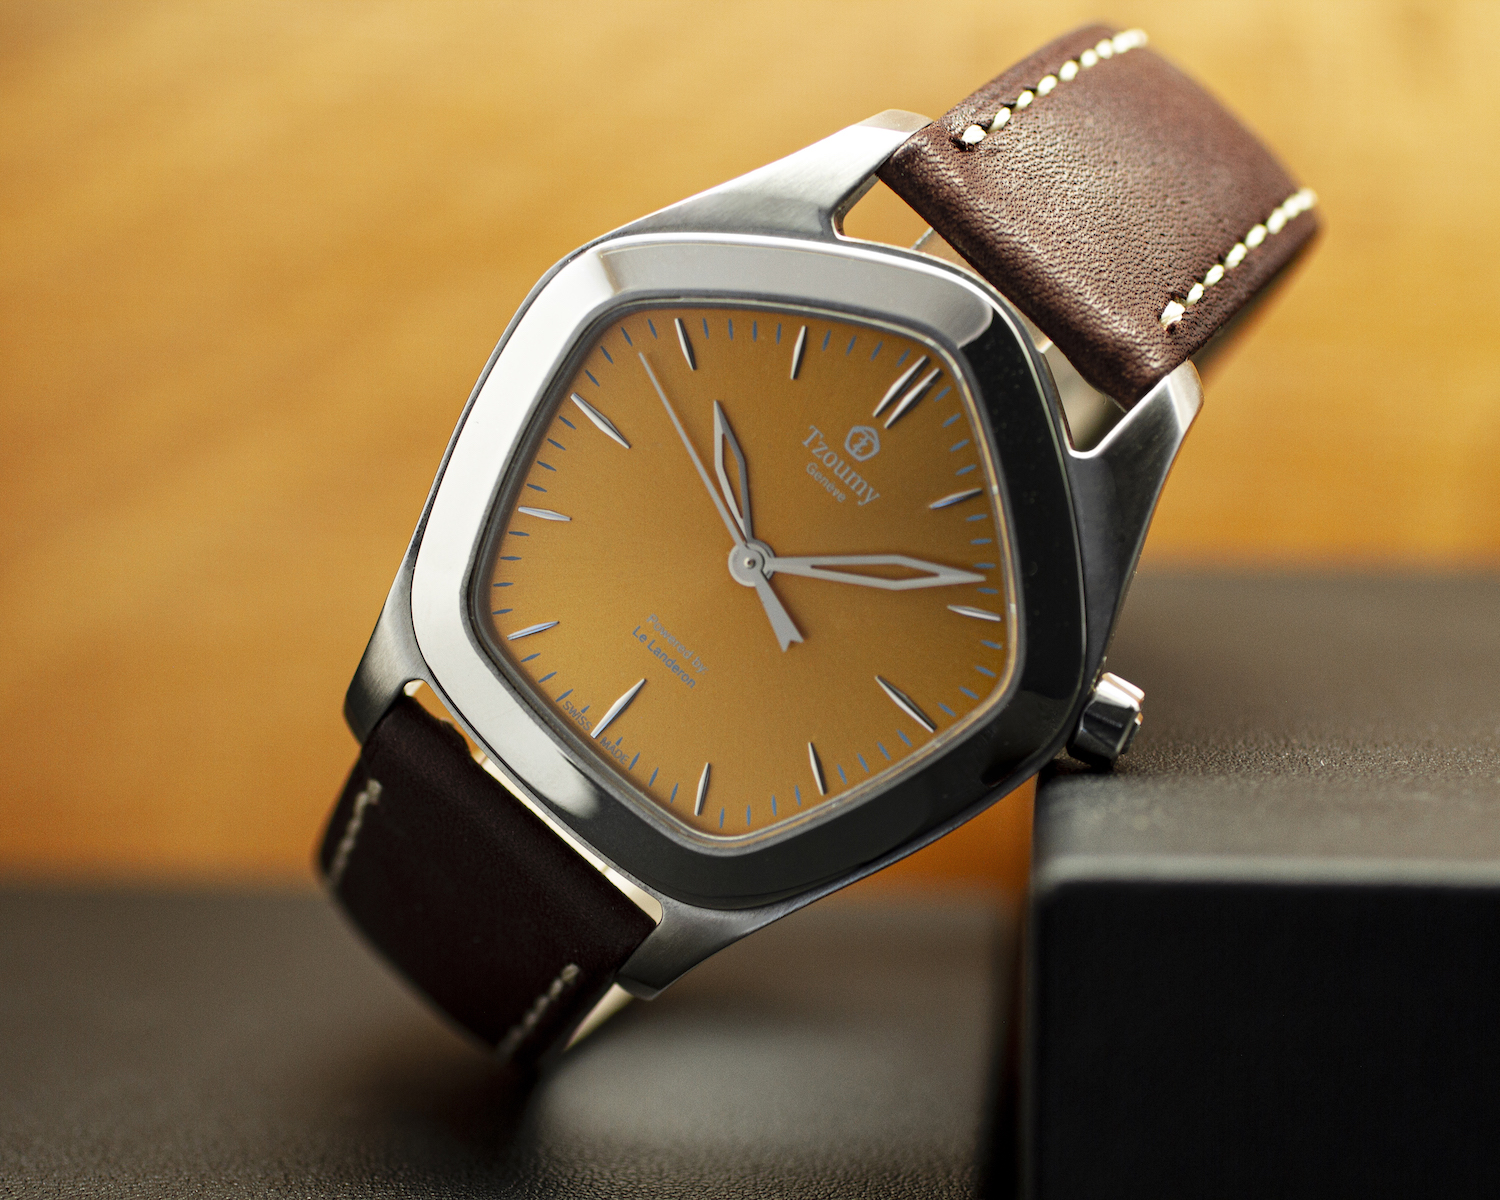 Tzoumy Watches - Pentagon-Shaped Watch Launching on Kickstarter